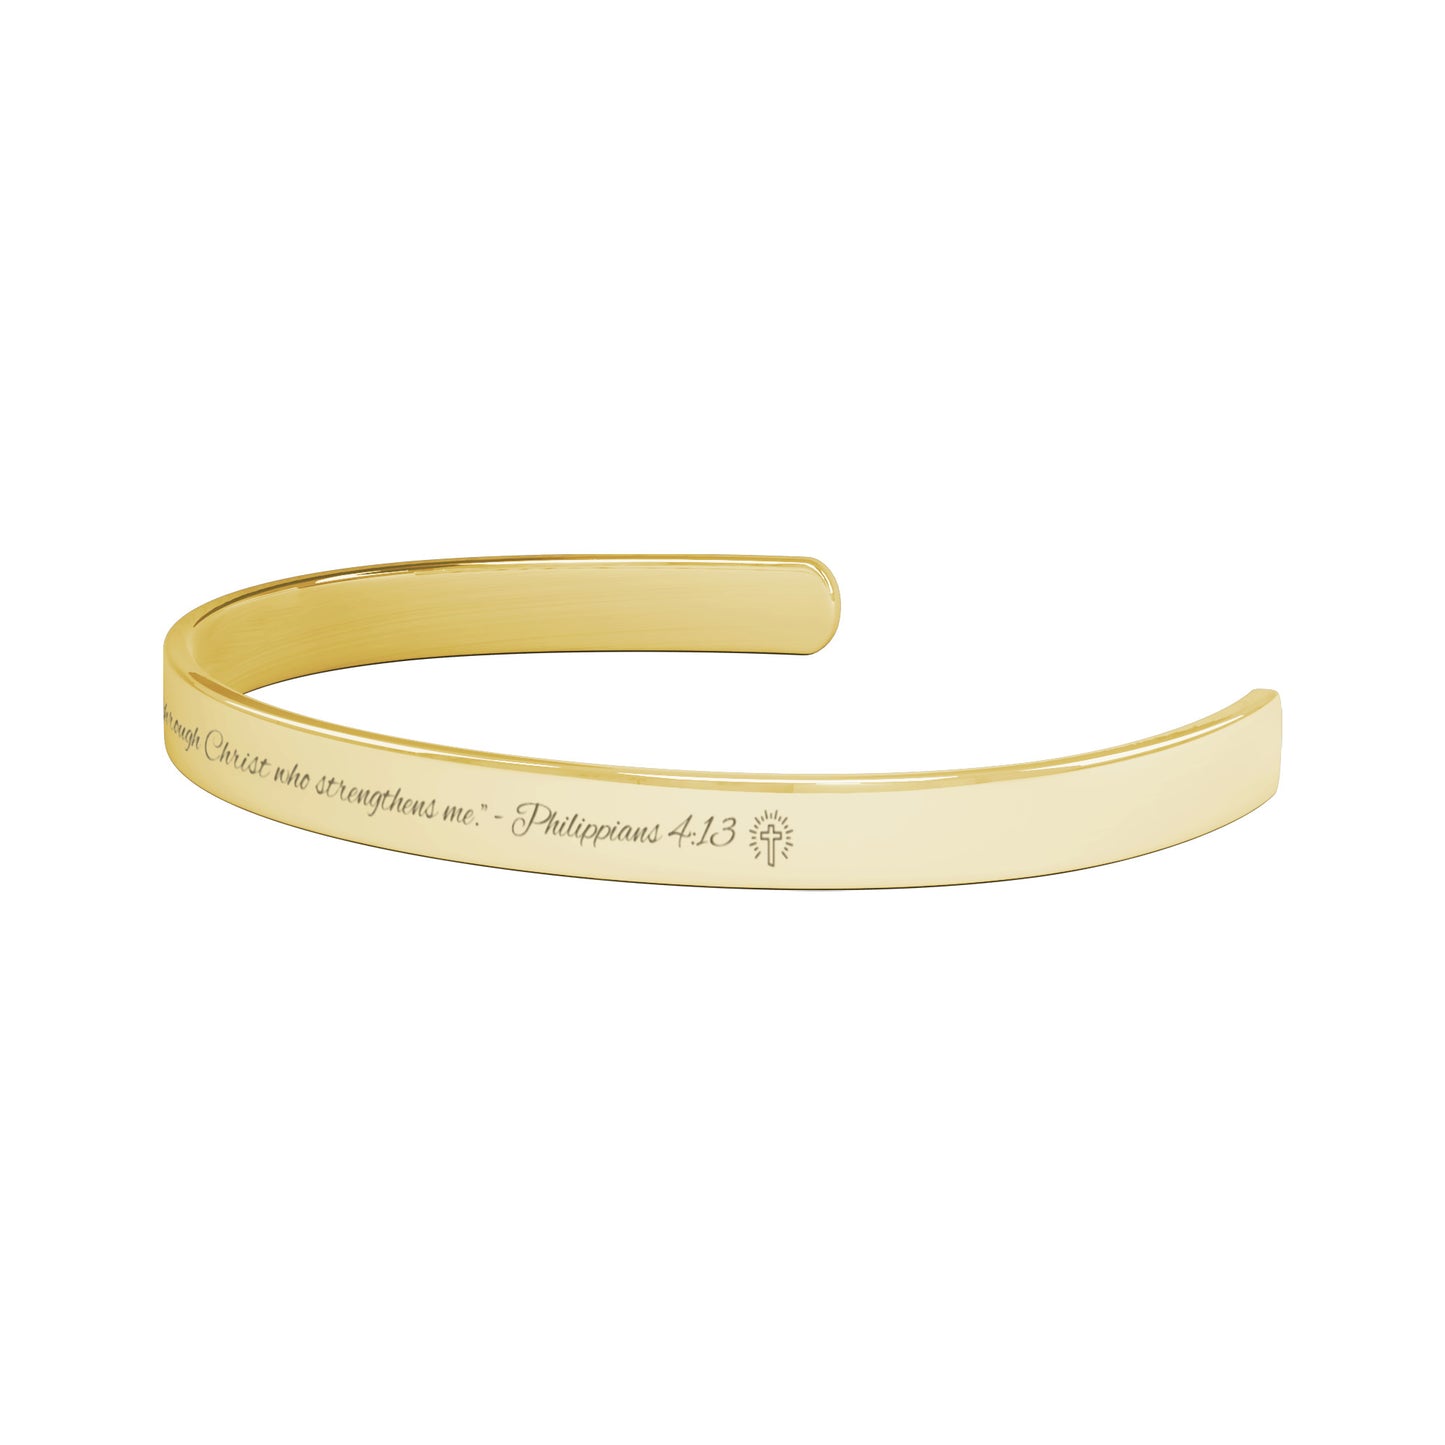 All Things through Christ - cuff bracelet